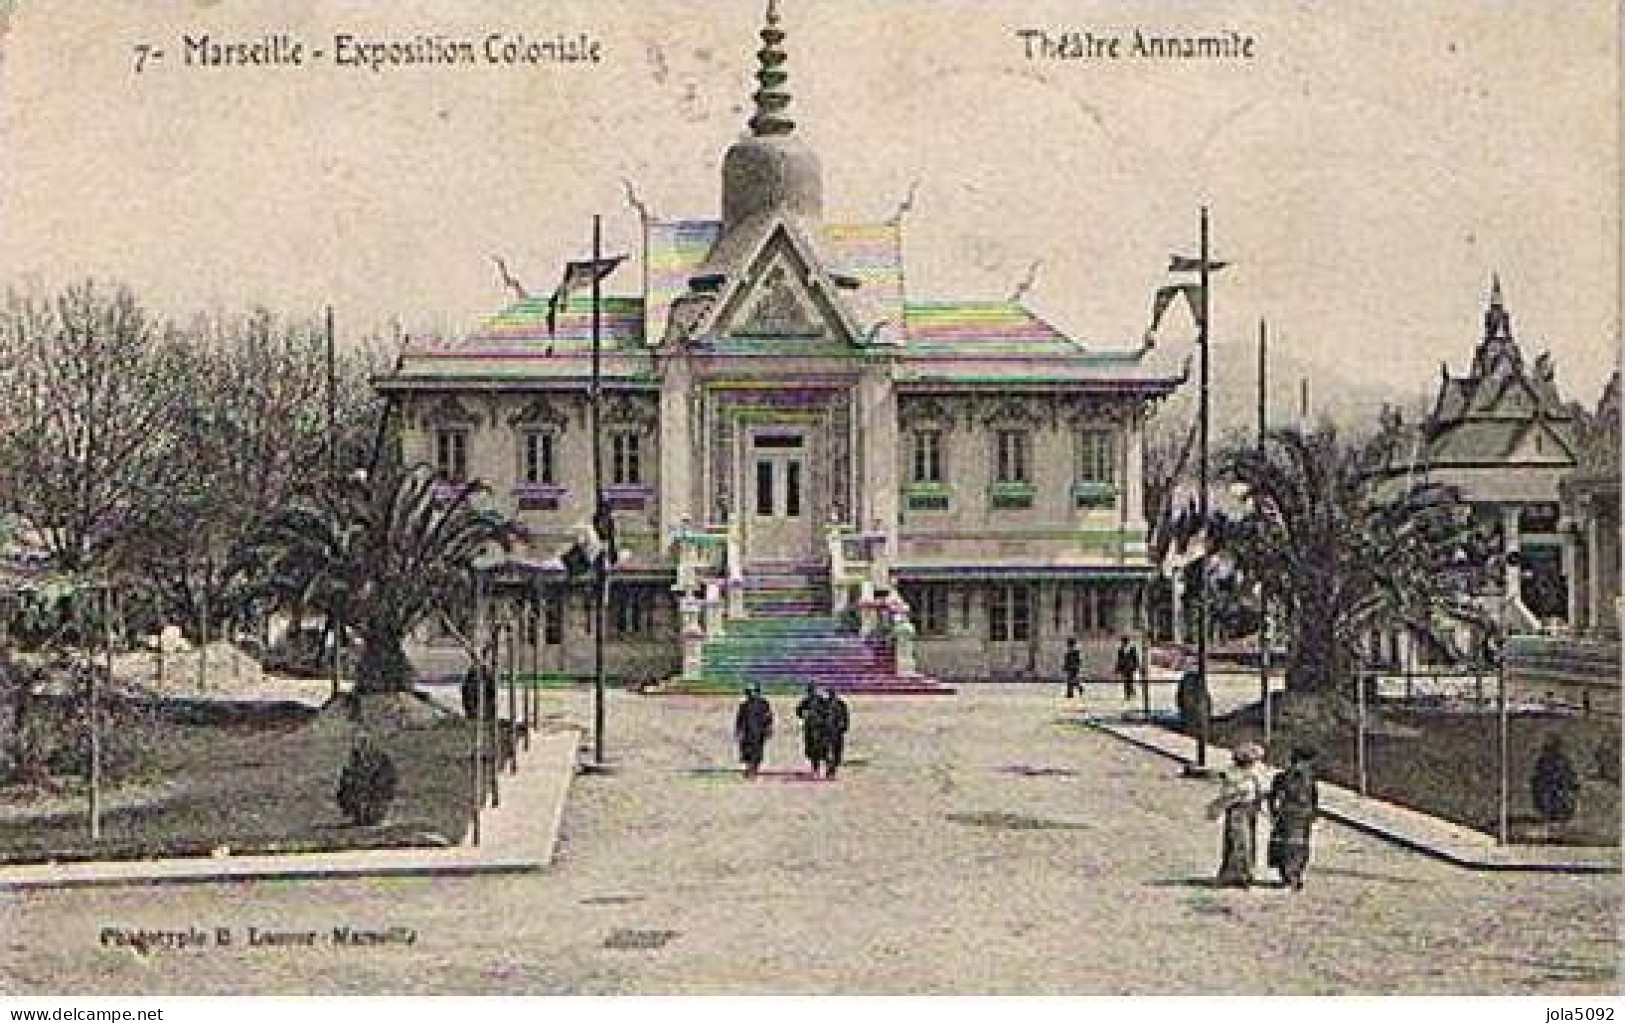 13 - MARSEILLE - Exposition Coloniale - Théâtre Annamite - Kolonialausstellungen 1906 - 1922